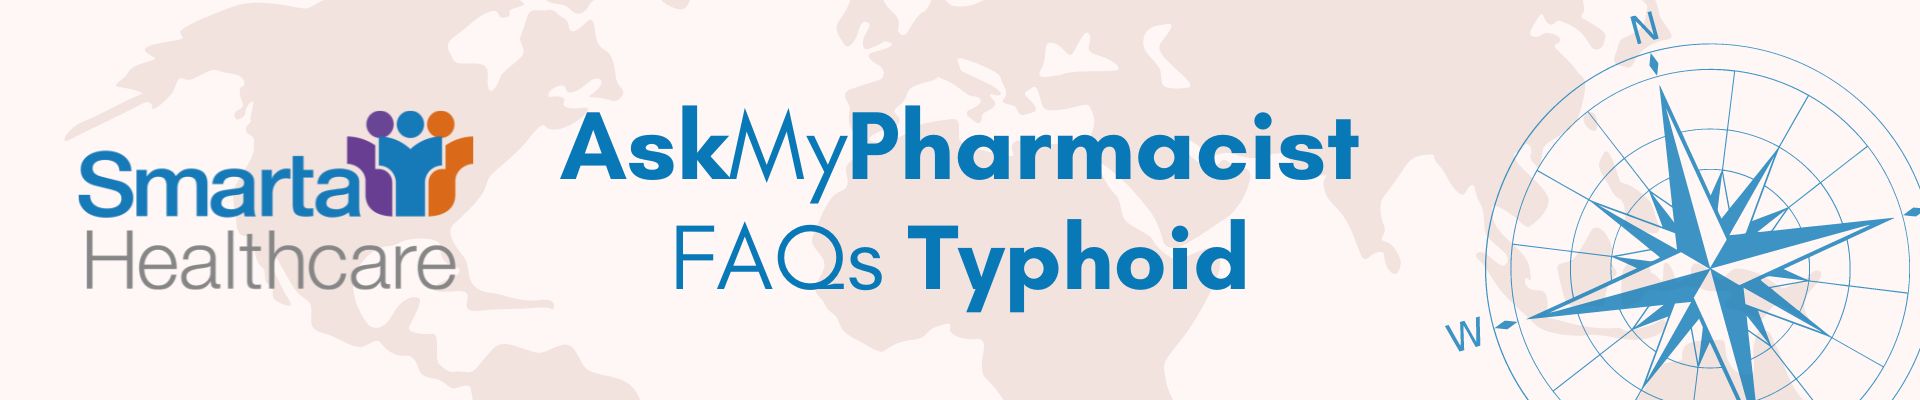 Smarta Healthcare AskMyPharmacist FAQs Typhoid Travel Vaccine